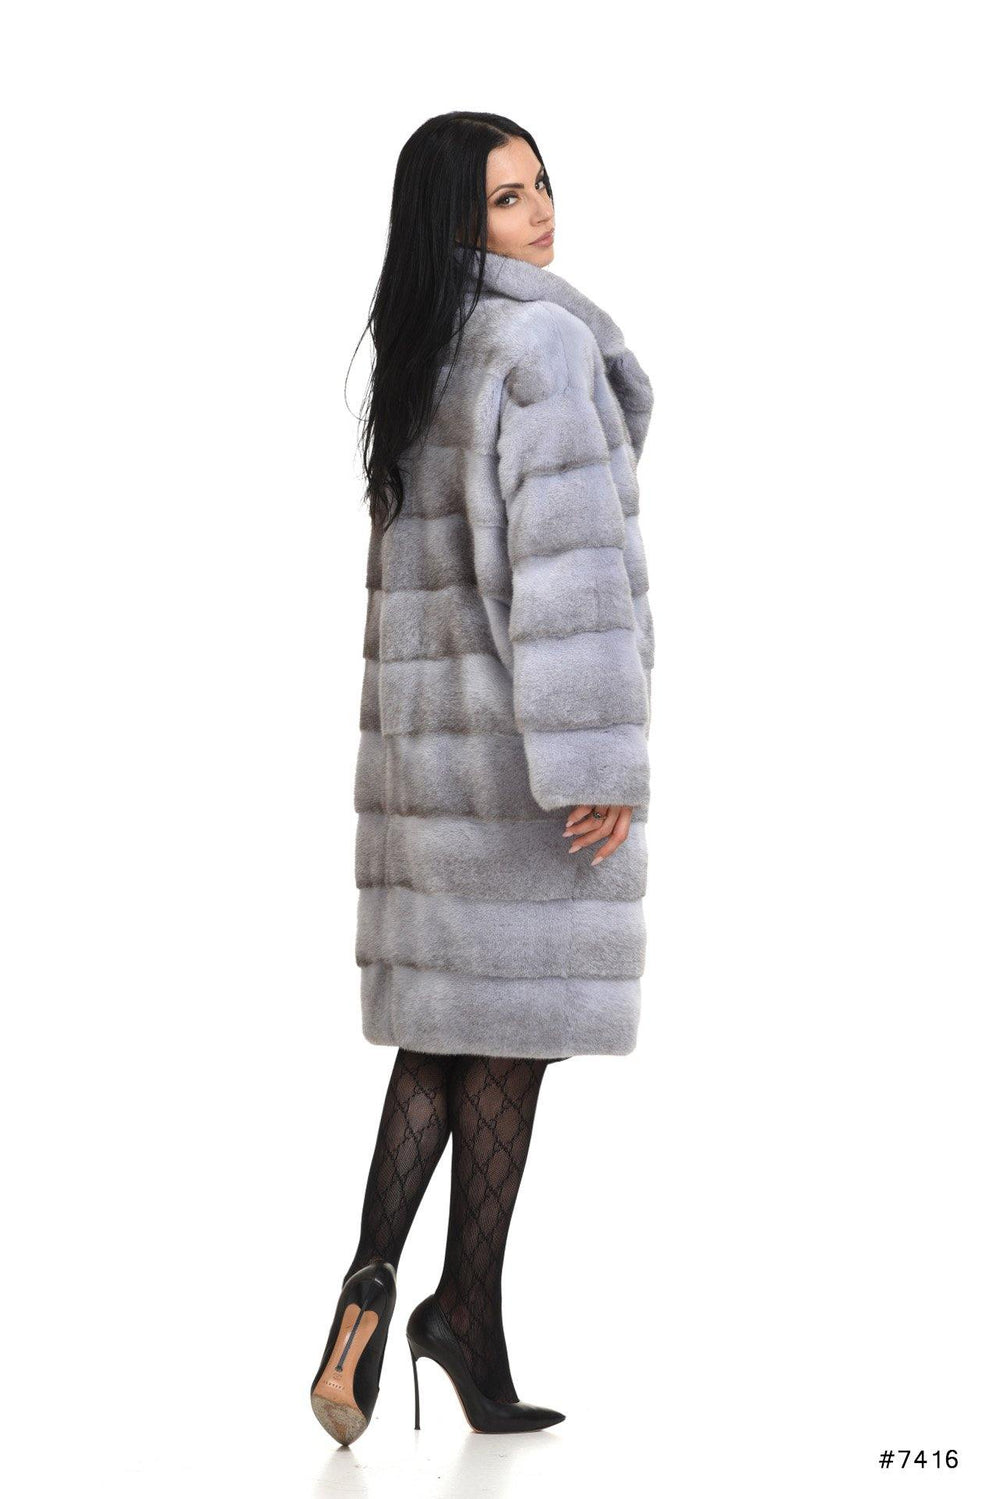 Classy basic mink coat with english collar - Manakas Frankfurt